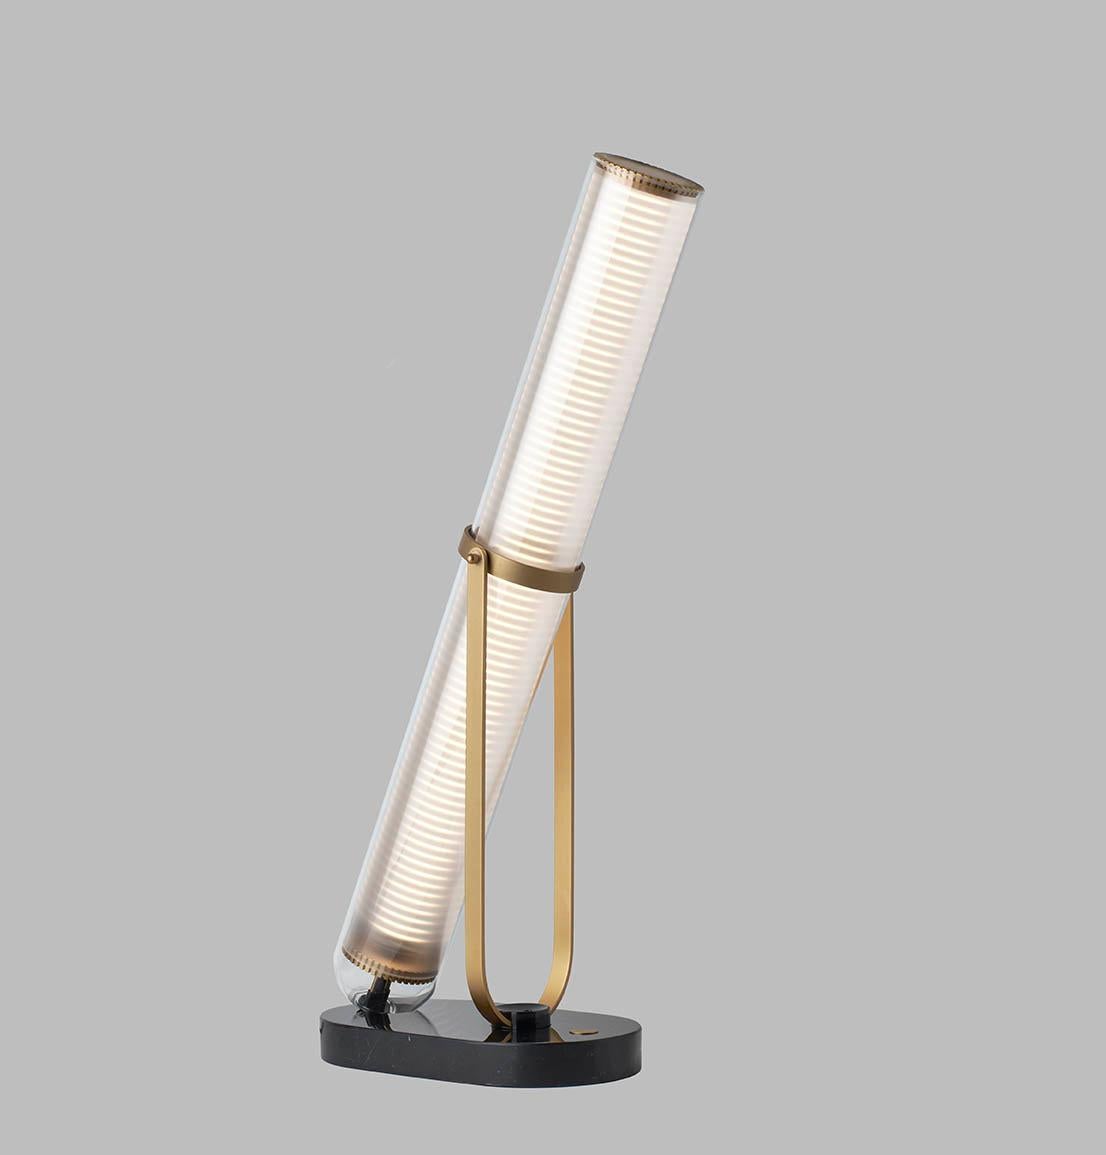 French La Lampe Frechin Table Lamp by Jean-Louis Frechin For Sale